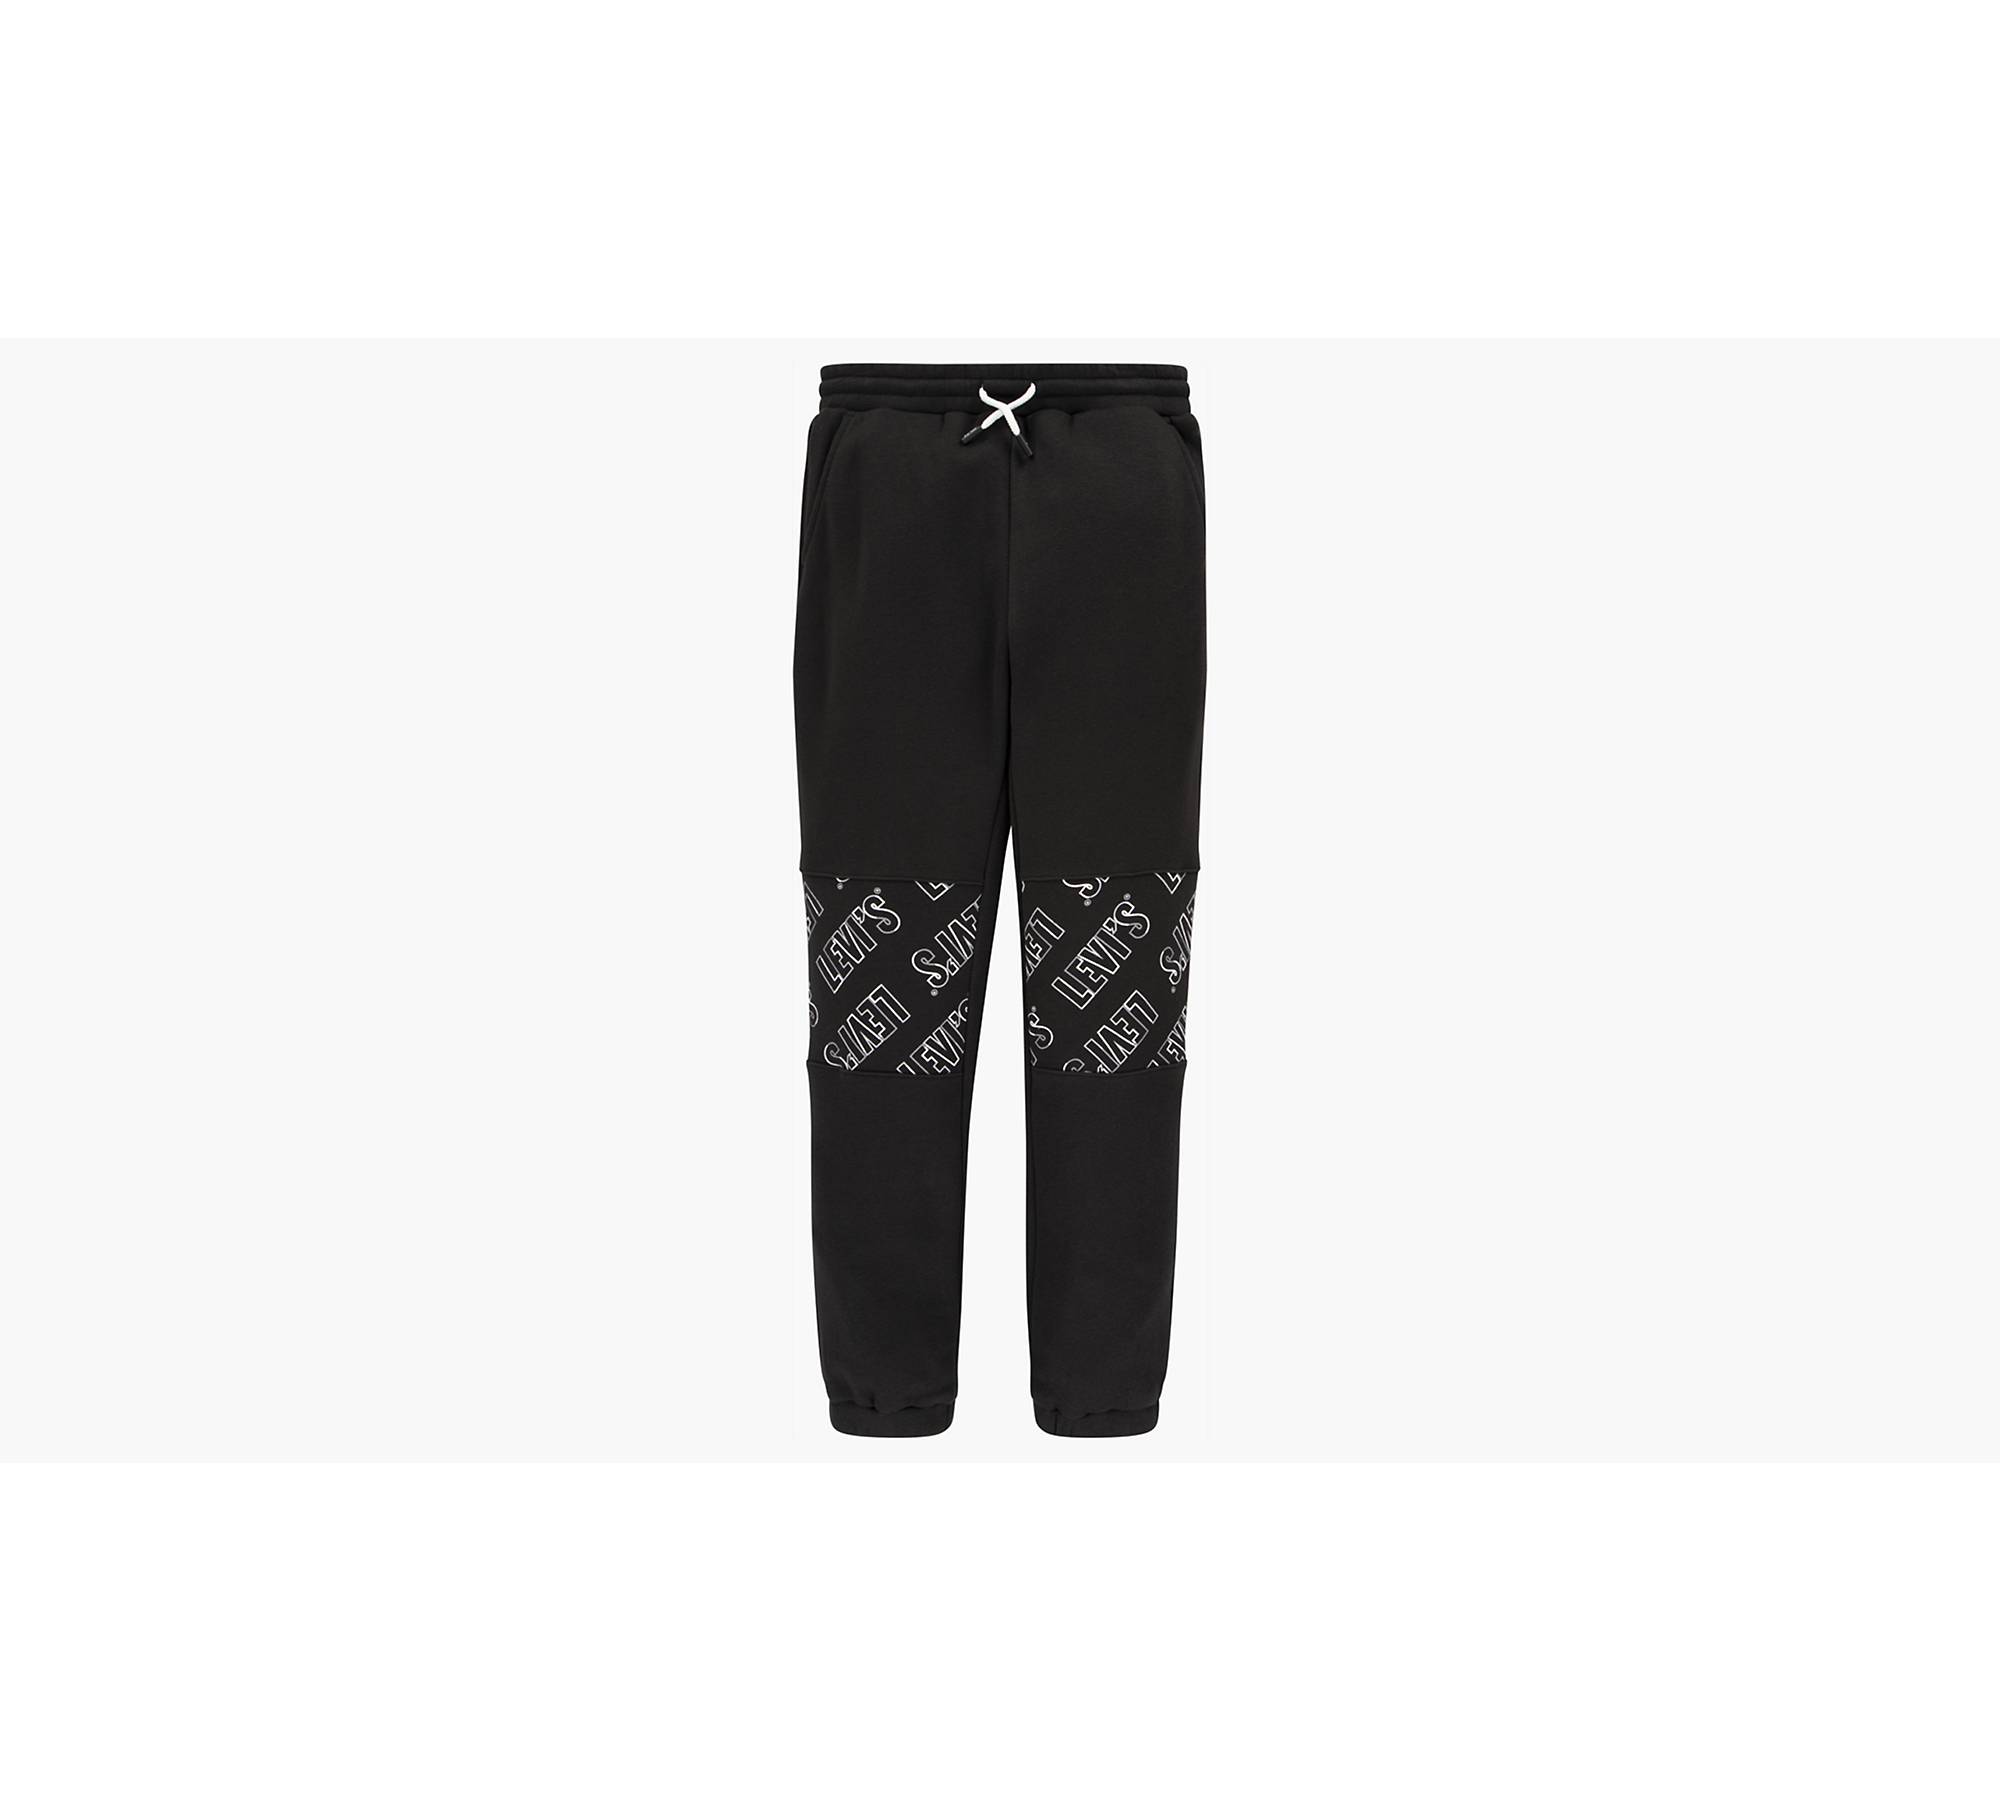 Boys' Sweatpants - Basic Active Fleece Jogger Pants (Size: 8-20